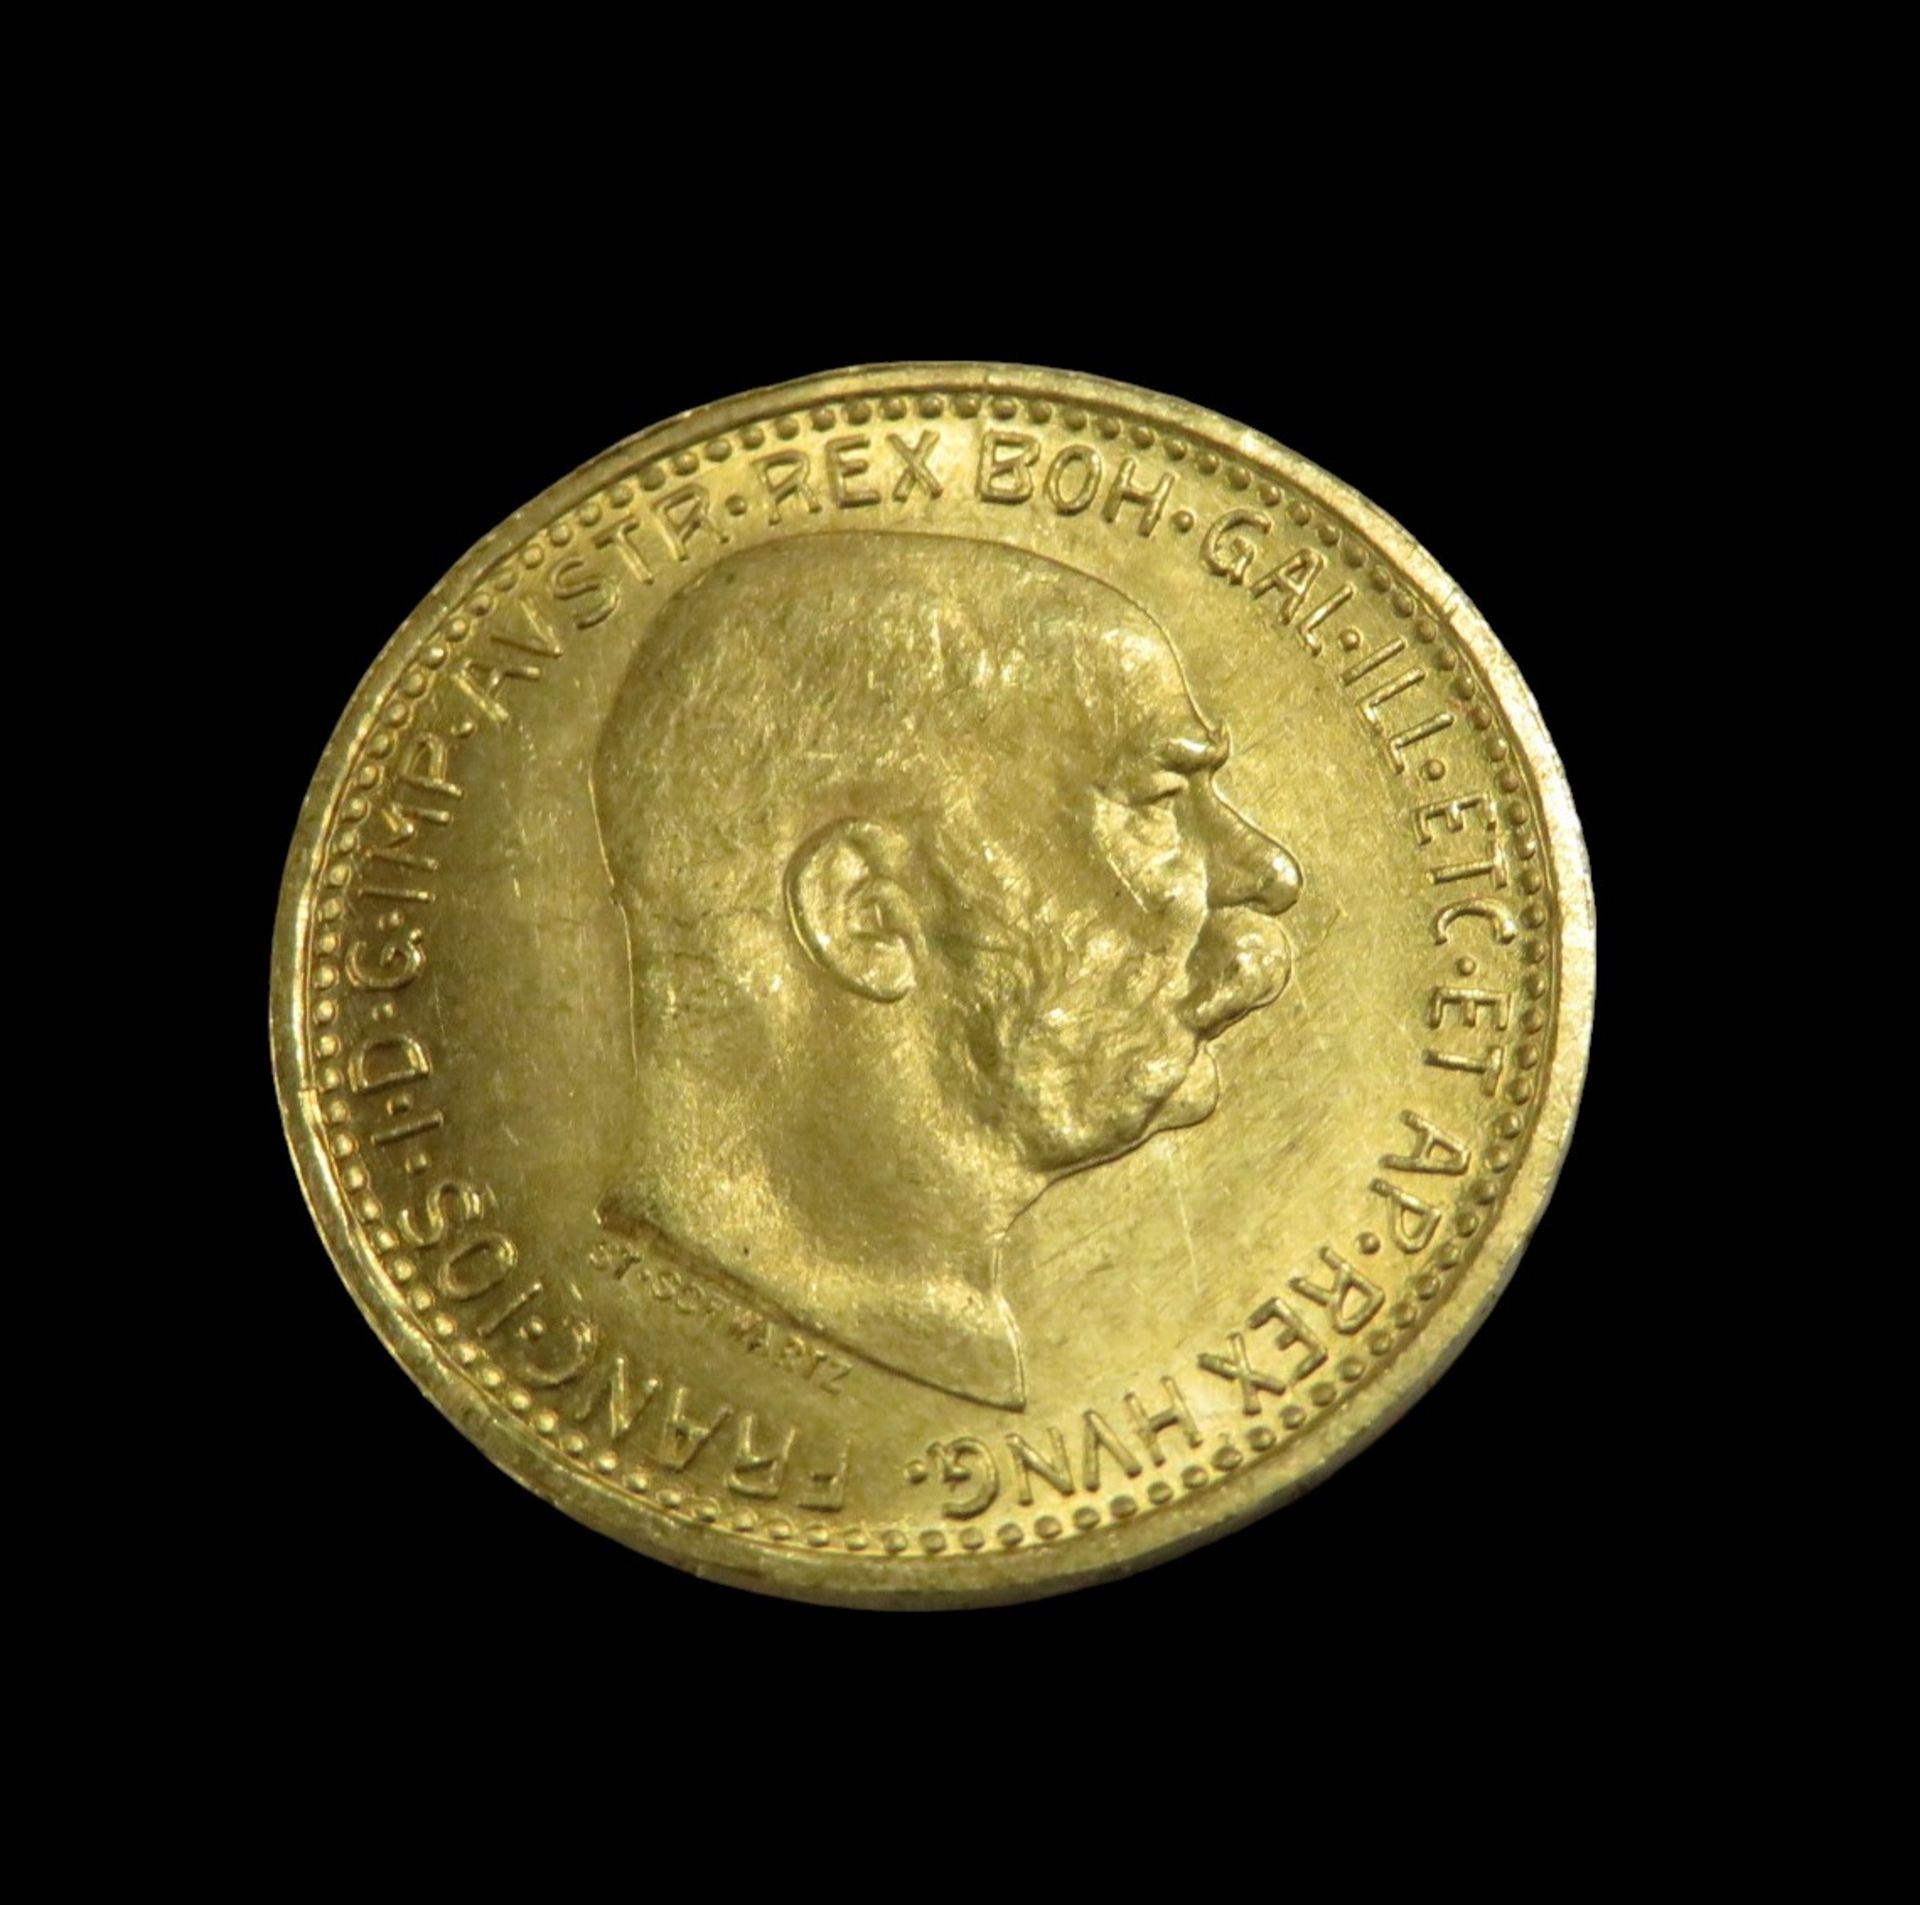 Goldmünze, Österreich, 10 Kronen, Franz Joseph I, 1912, Gold 900/000, 3,3 g, d 1,9 cm.